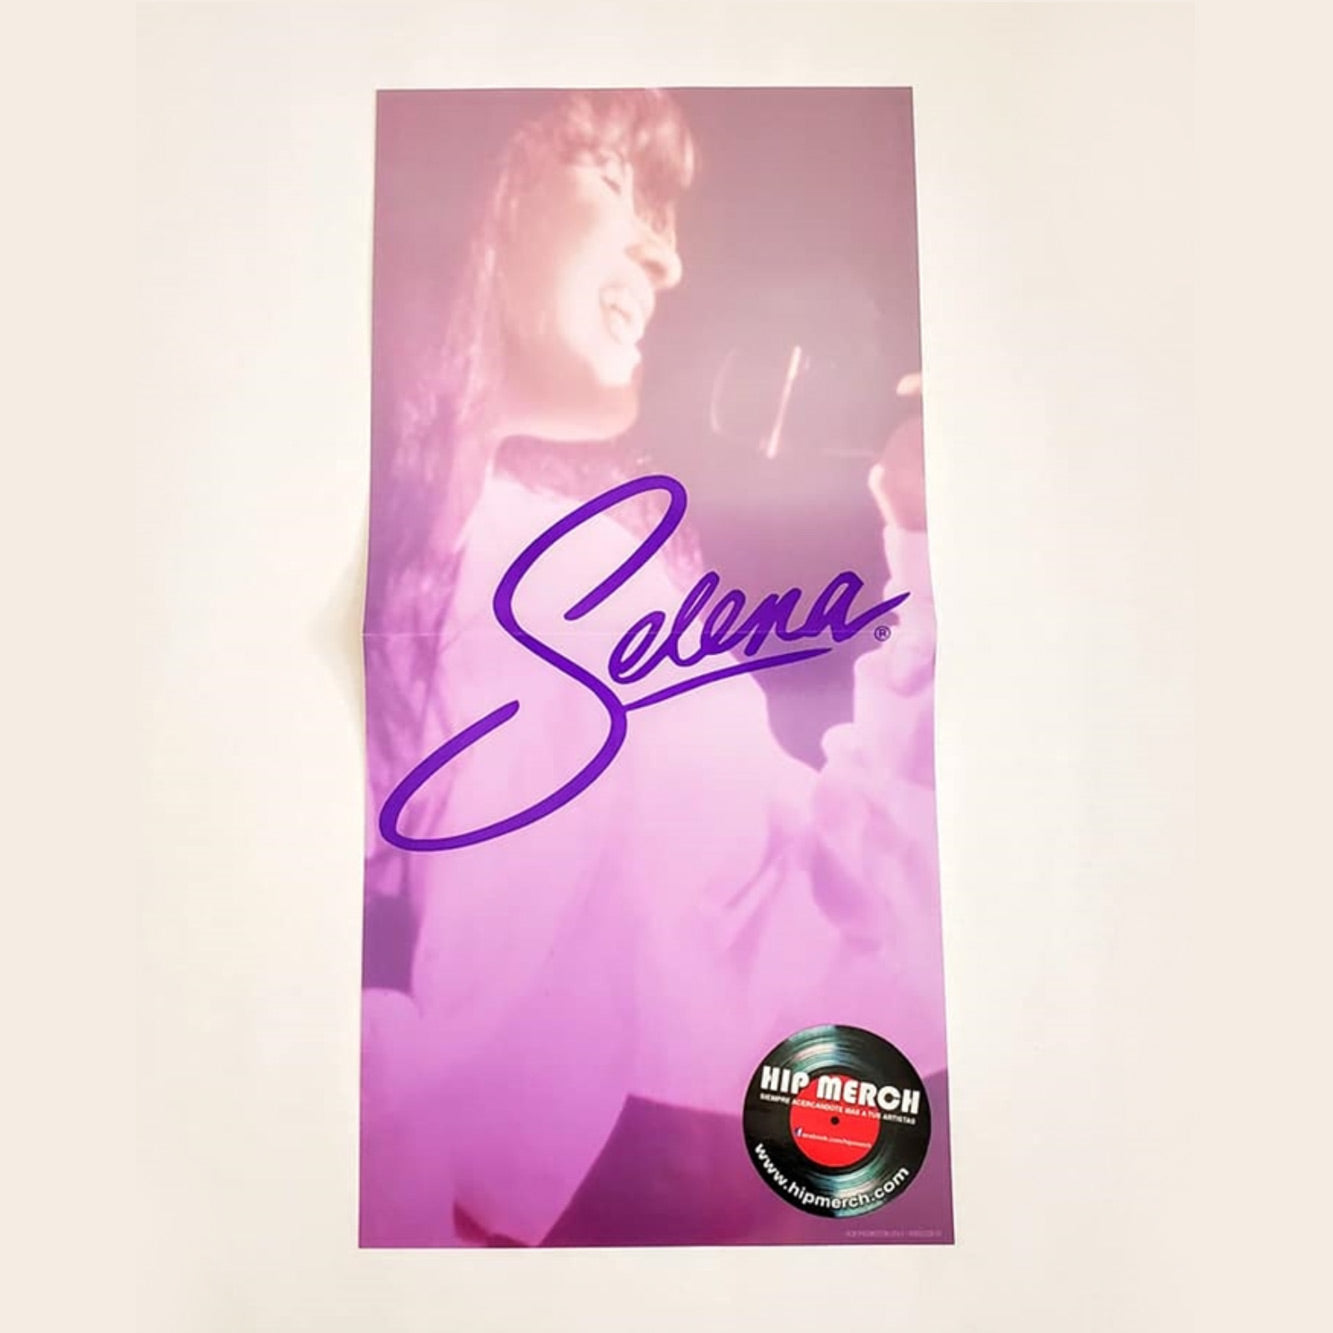 Selena - Ones (2LP Picture Disc Vinyl) - Limited Edition ...